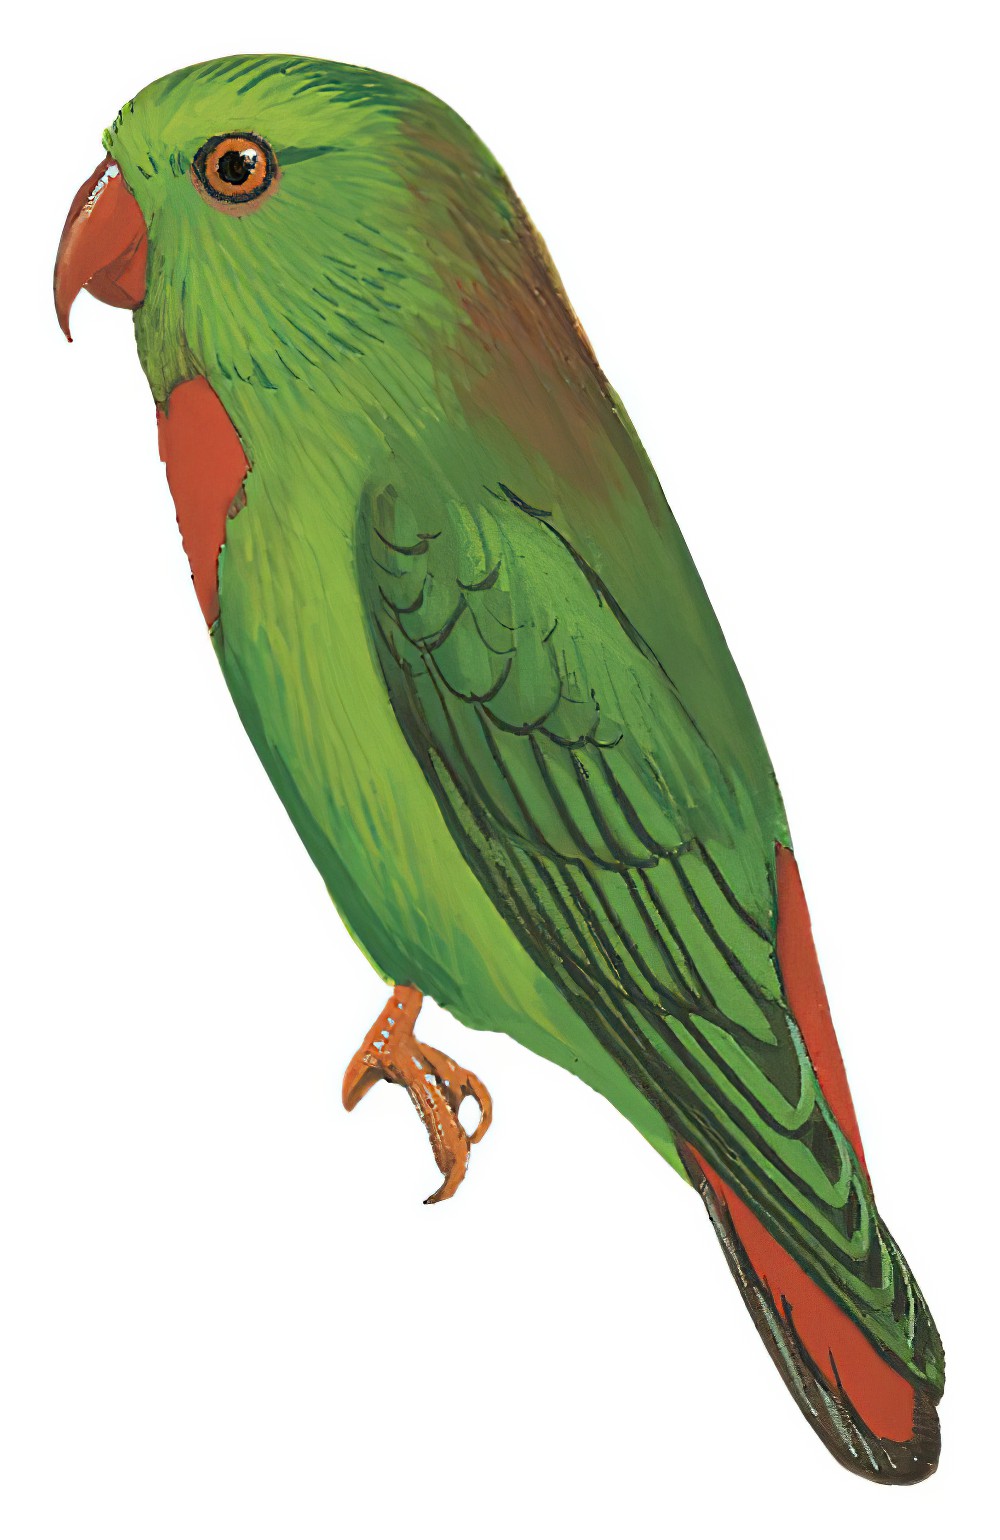 瓦氏短尾鹦鹉 / Wallace's Hanging Parrot / Loriculus flosculus